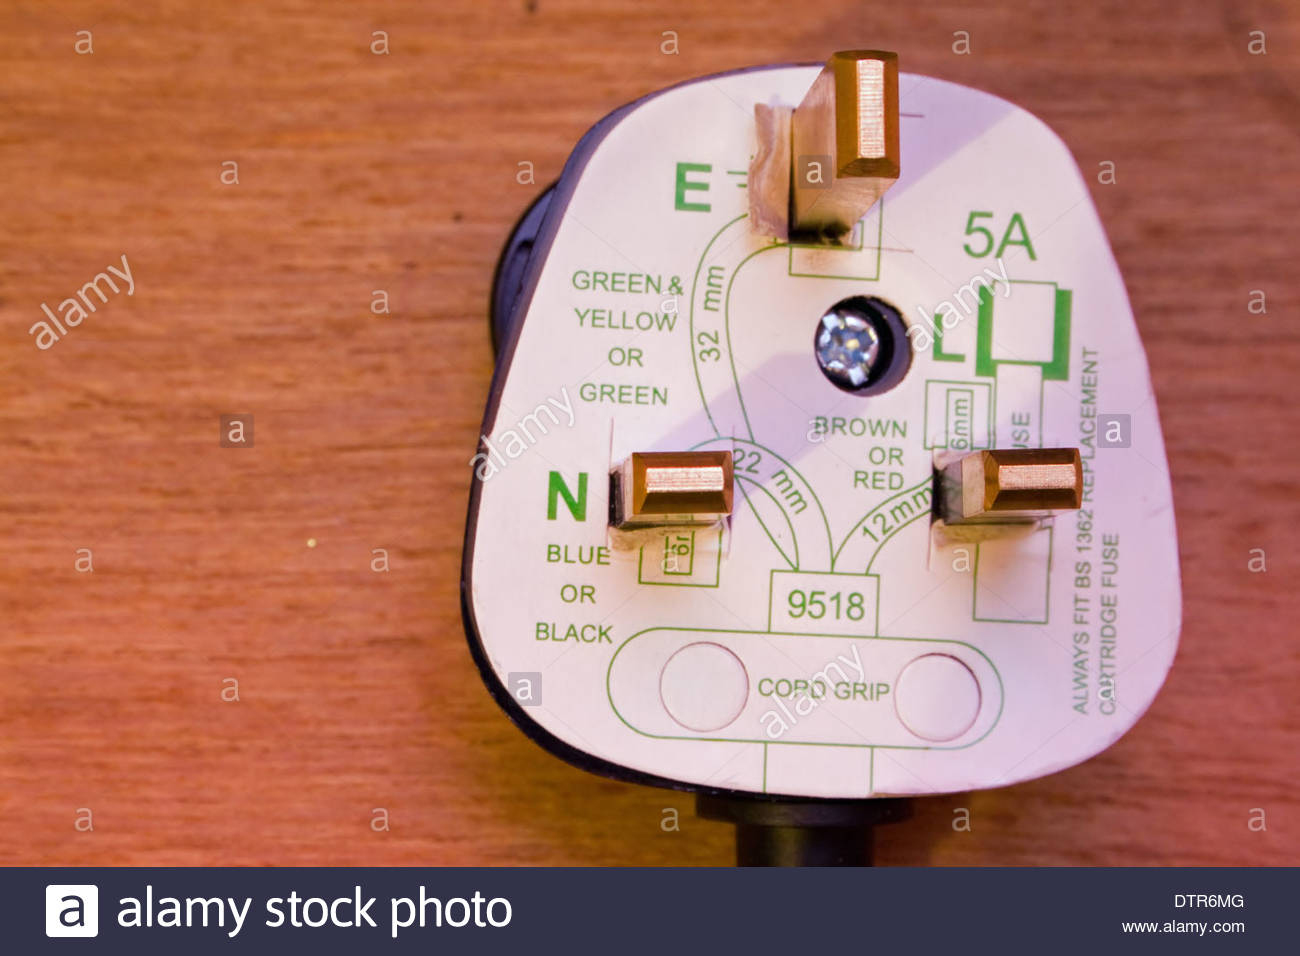 Uk Three Pin Plug With Wiring Diagram Stock Photo: 66893024 - Alamy - Plug Wiring Diagram